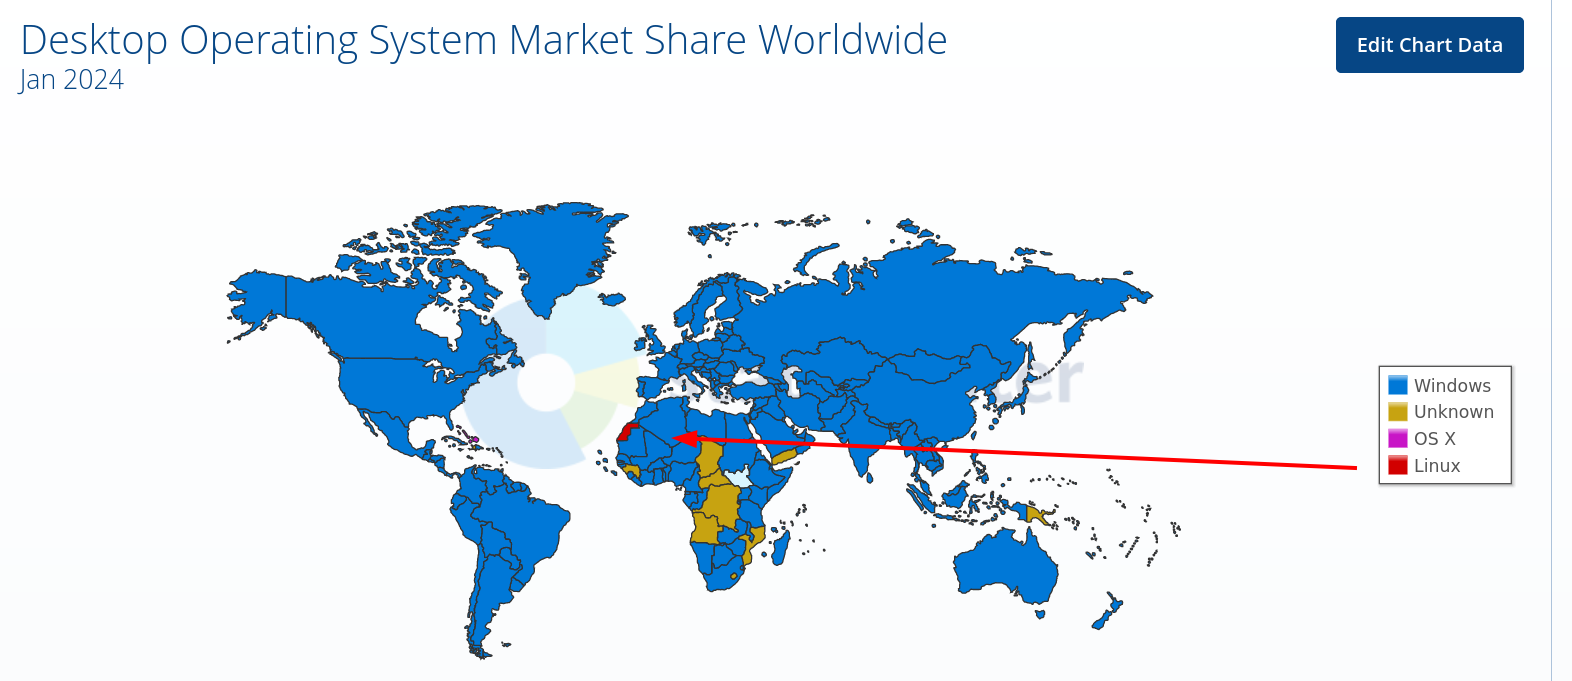 Desktop Operating System Market Share Worldwide: West Africa